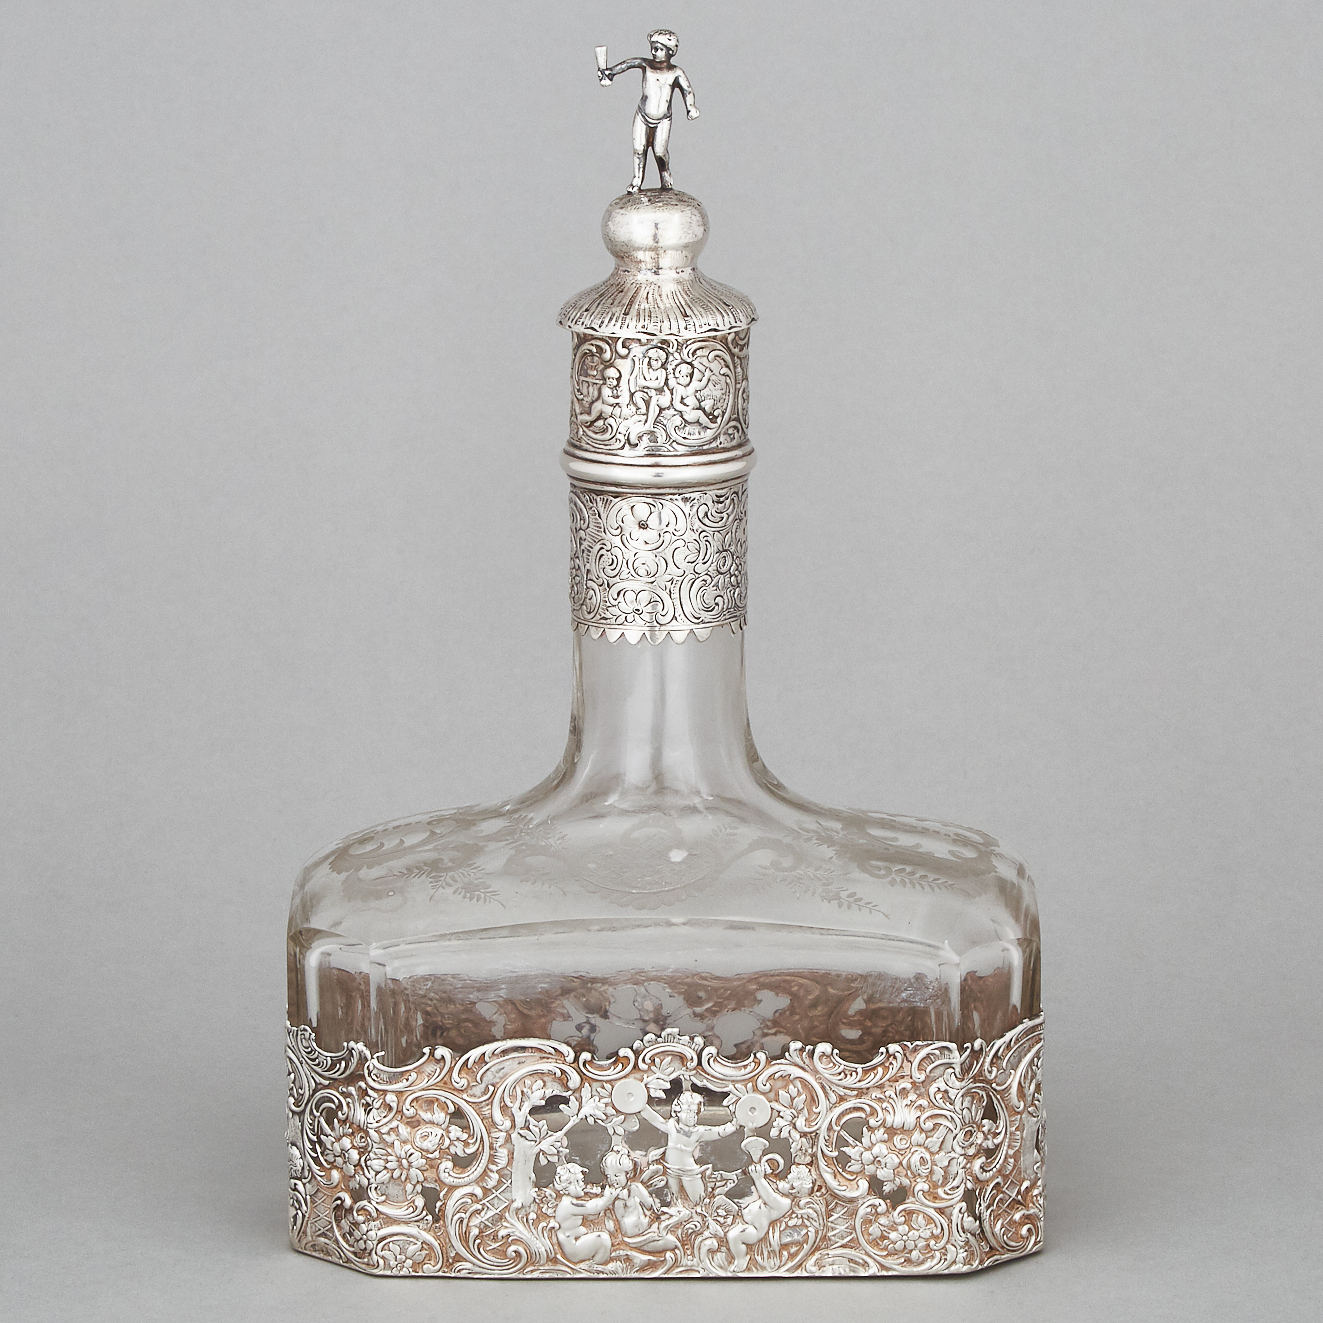 German Silver Mounted Etched Glass Decanter, Weinranck & Schmidt, Hanau, c.1900